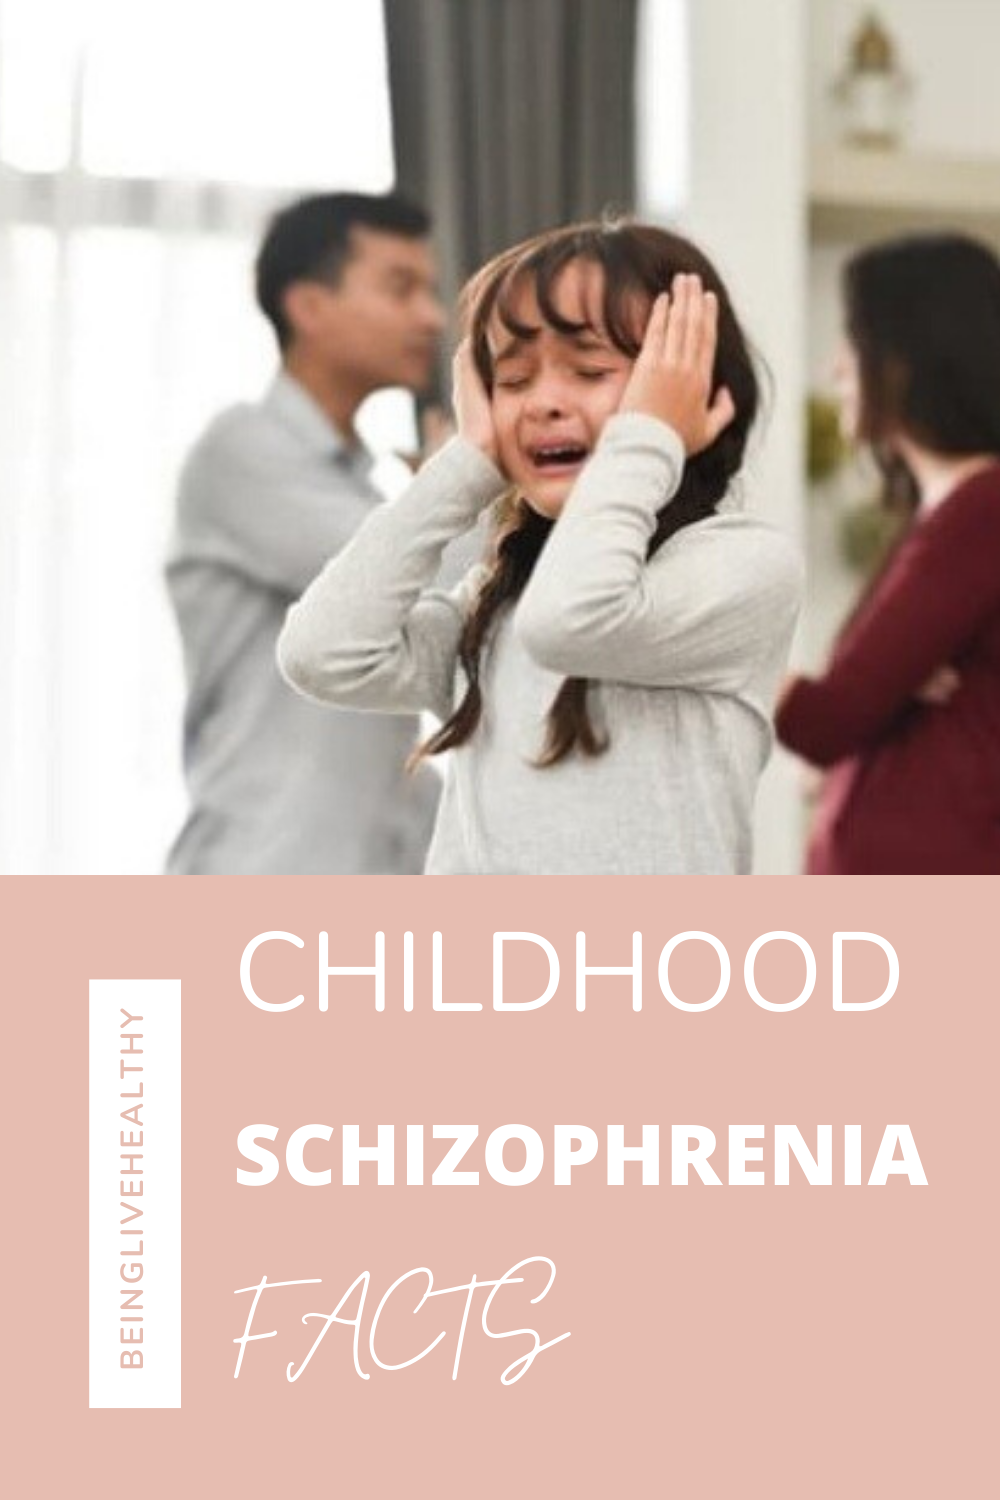 Childhood Schizophrenia Facts